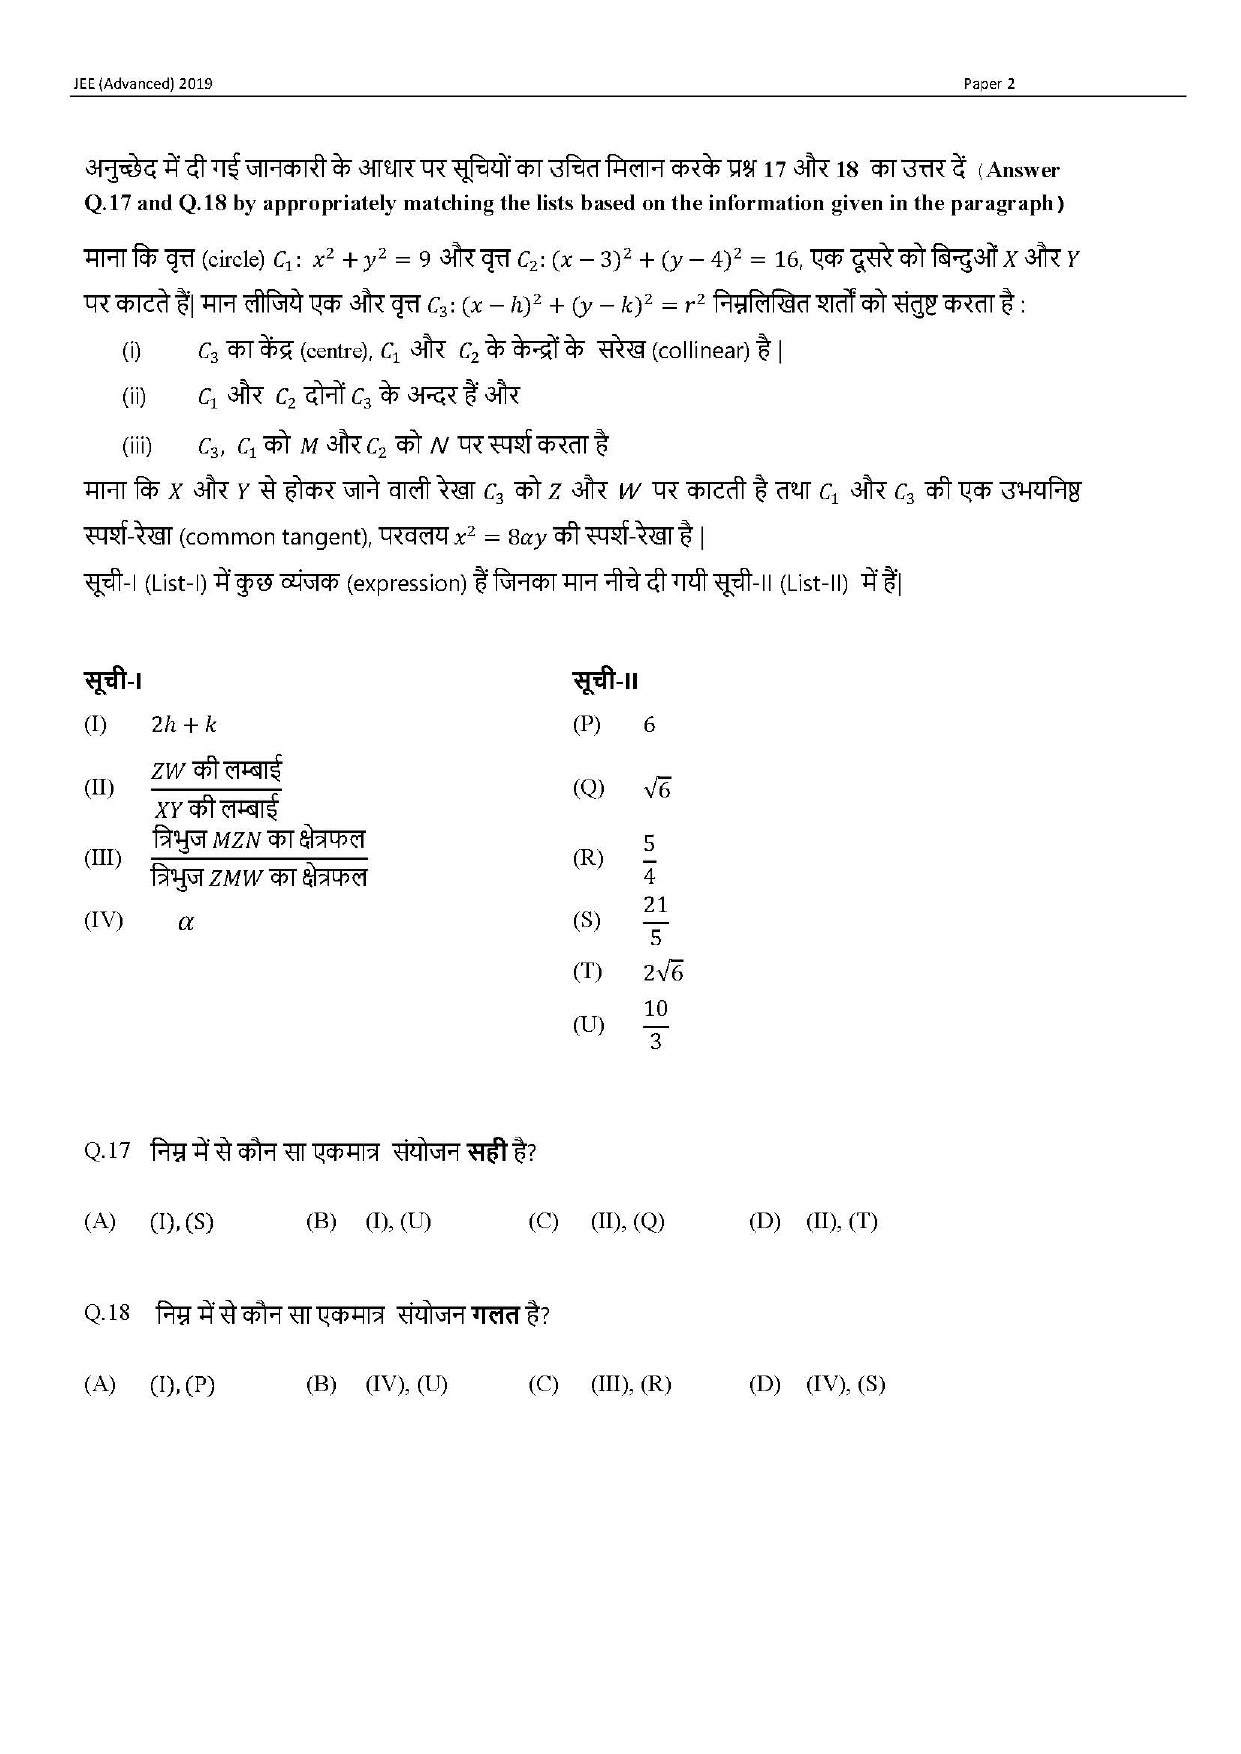 JEE Advanced Hindi Question Paper 2019 Paper 2 Mathematics 10